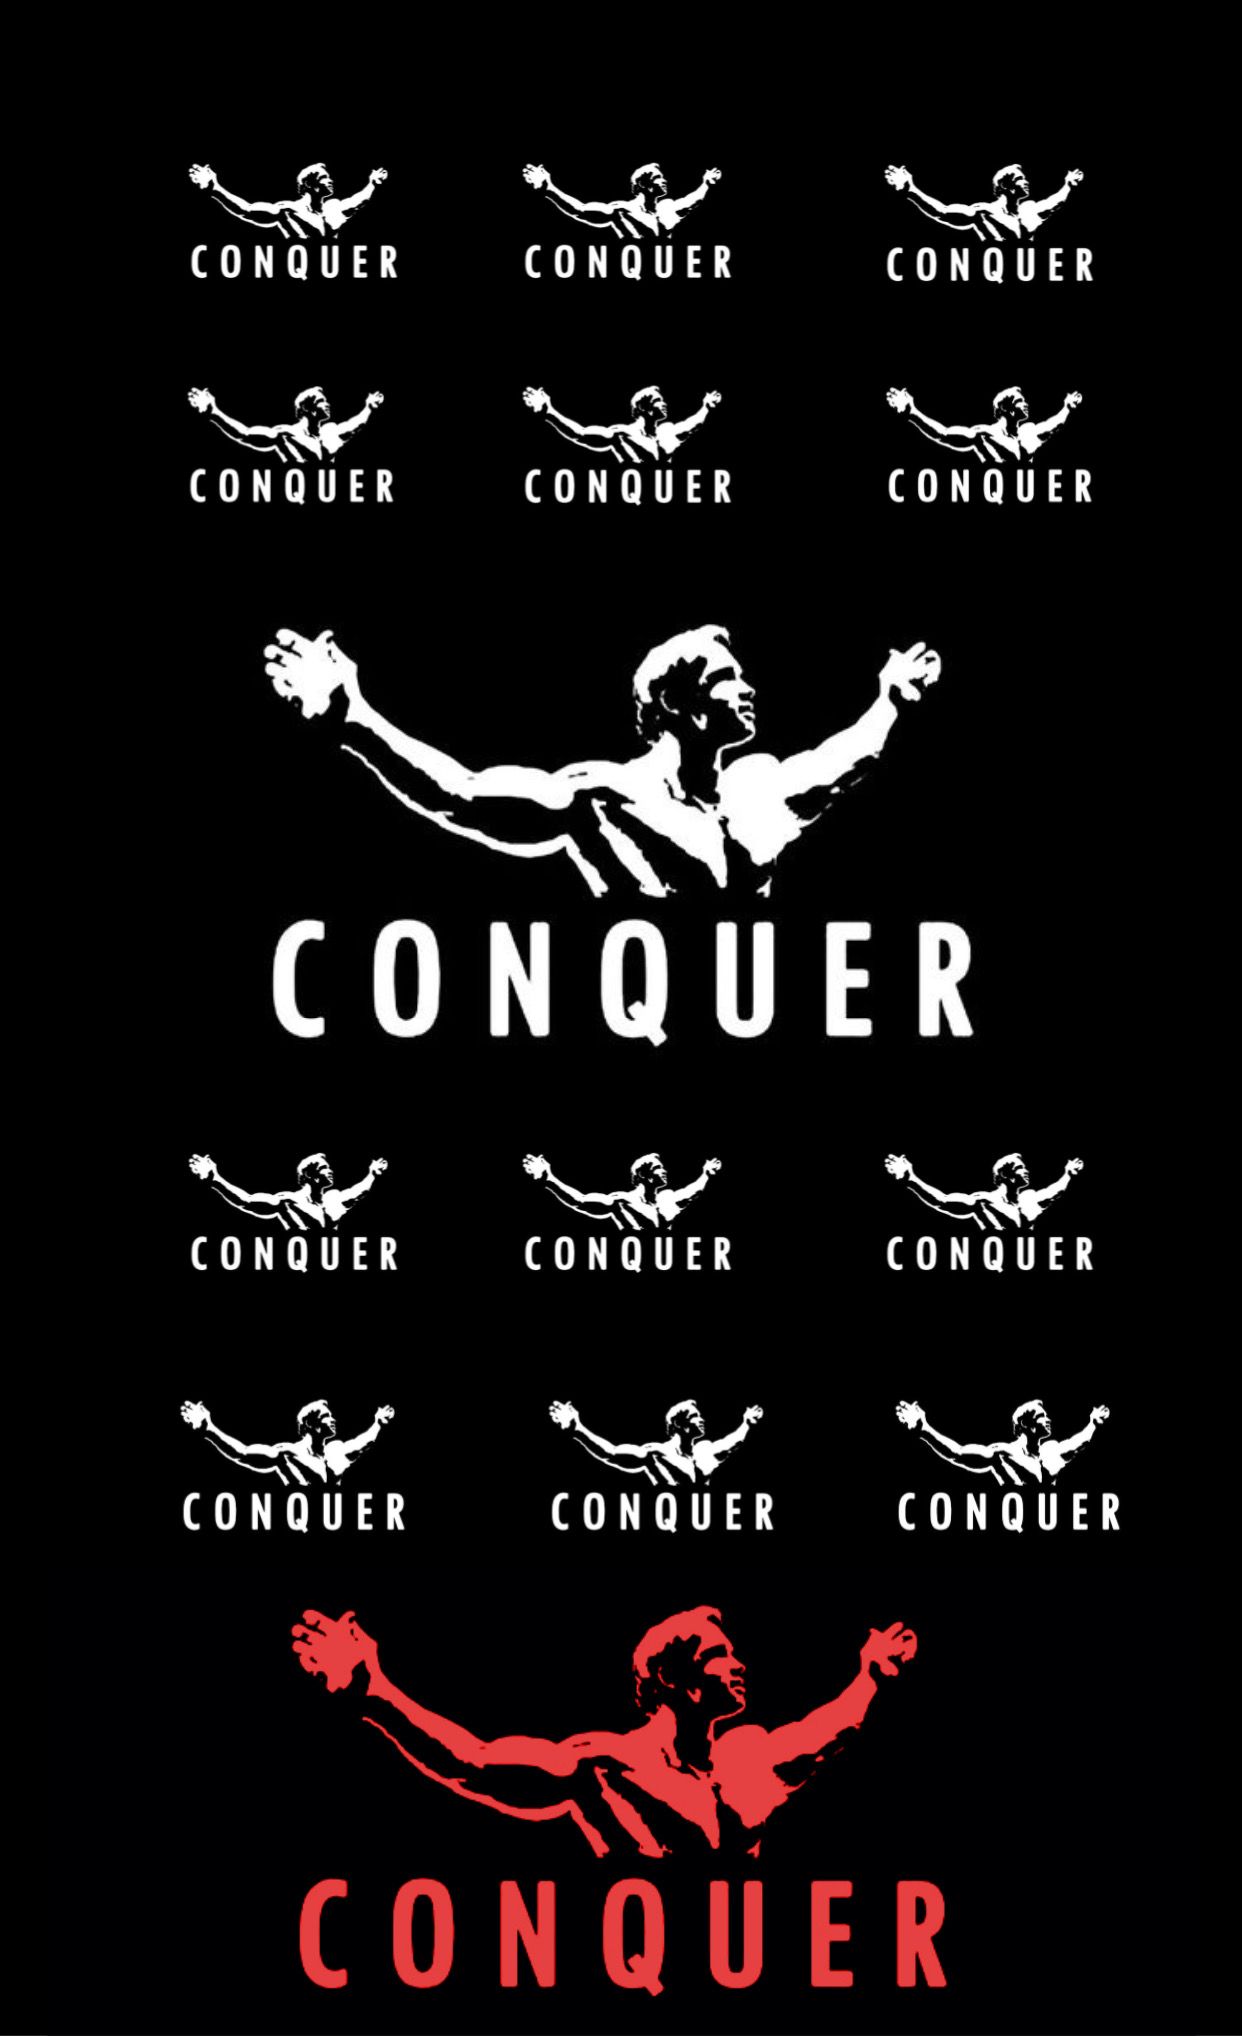 Arnold conguer iphone wallpaper. Conquer wallpaper, Wallpaper, iPhone wallpaper